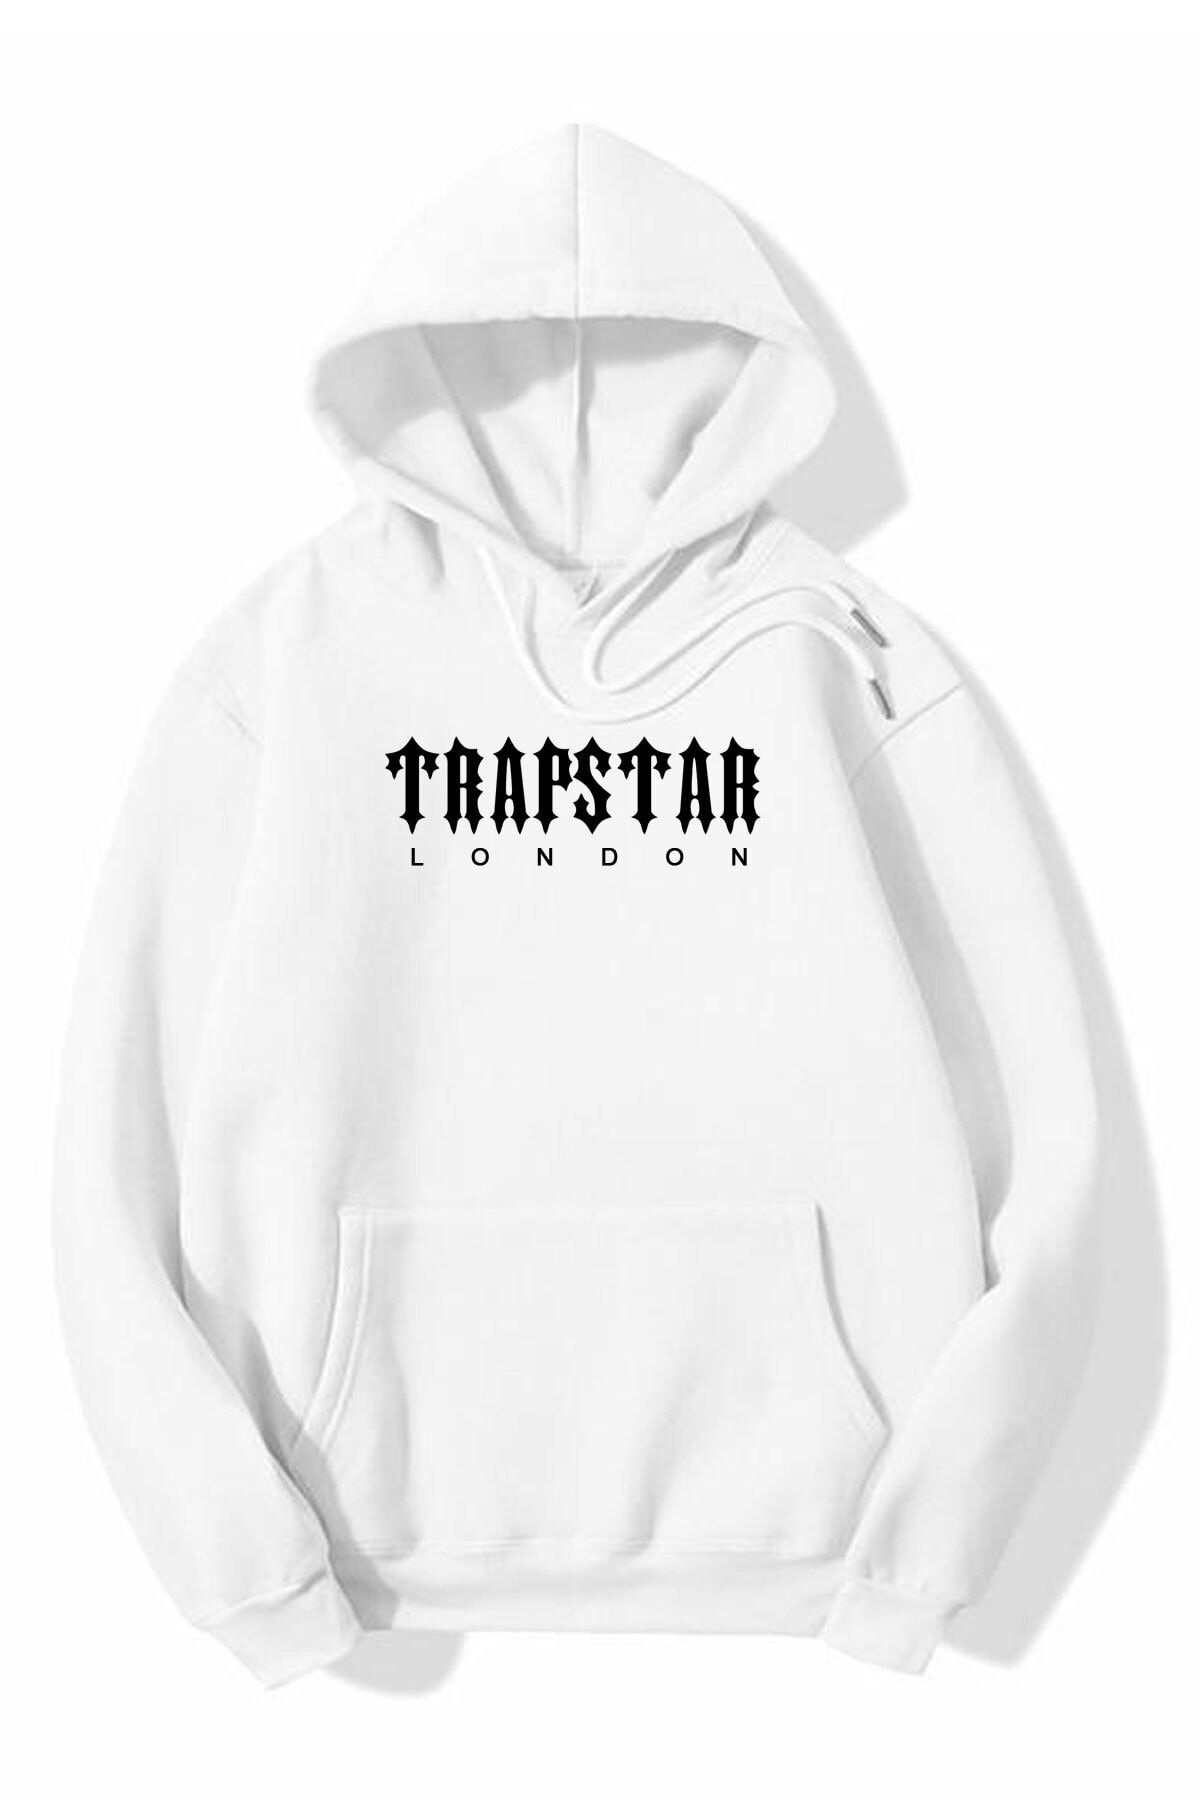 Trapstar Tracksuit 2 Pieces Set Unisex Hoodies Fleece Sweatshirt+